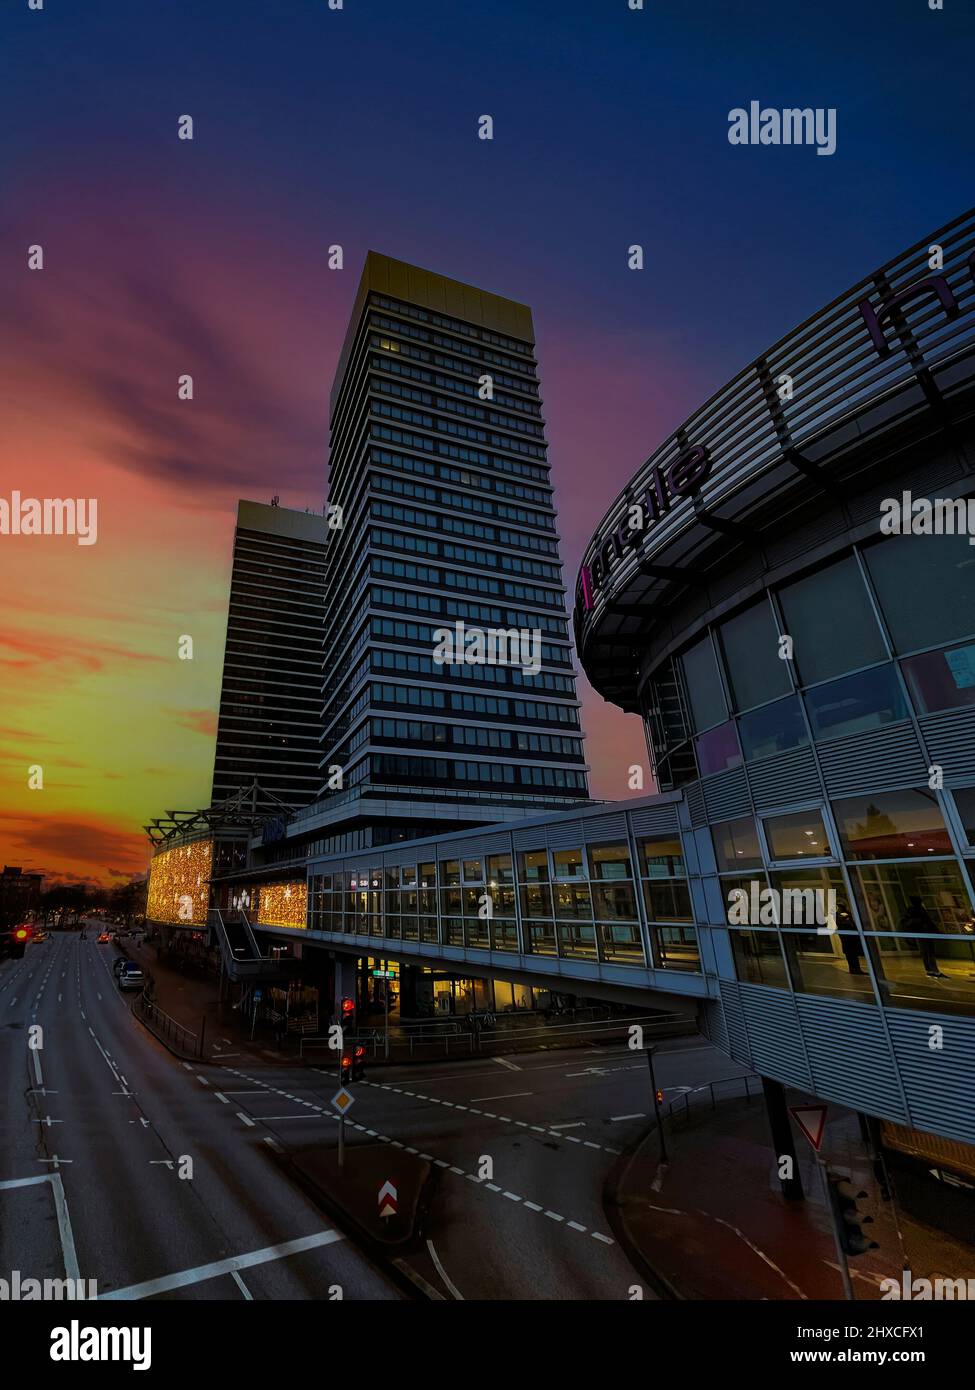 Hamburger Meile Einkaufszentrum, Hamburg, Deutschland, Europa Stockfoto